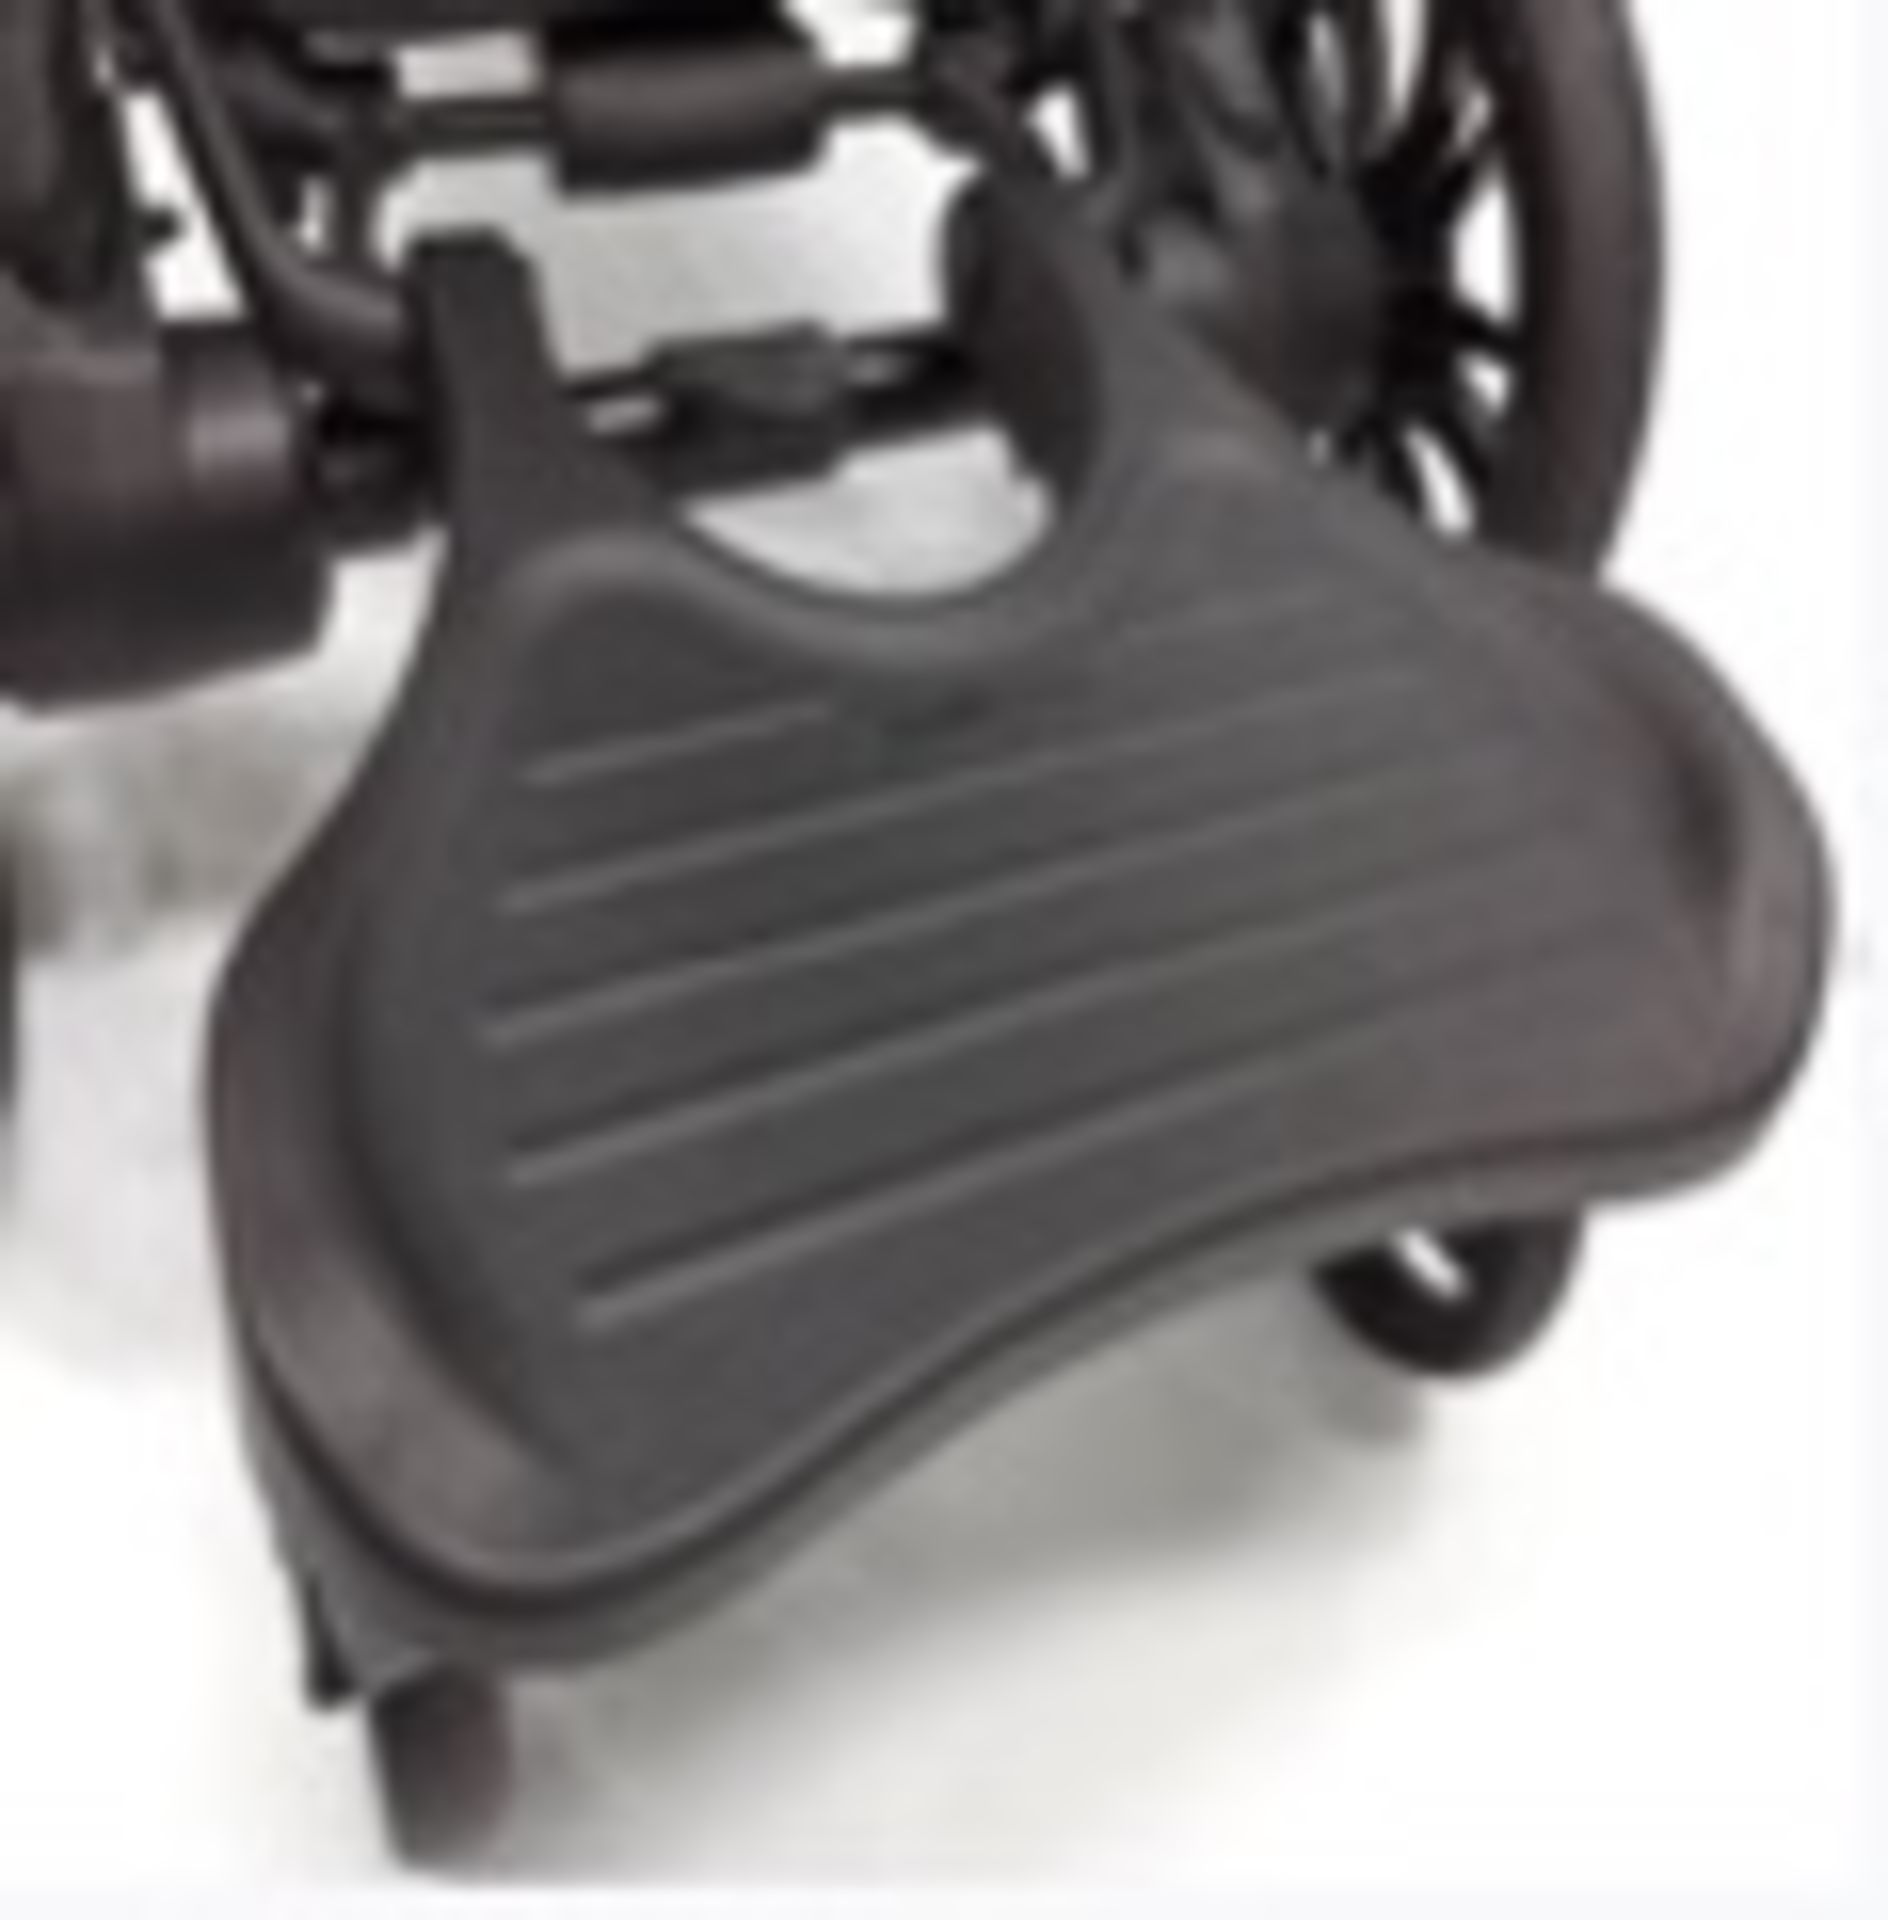 Junior Jones Luxury 5 piece MEGA PACKAGE DEAL J Carbon Stroller with Spoked Wheels RRP £2500 + - Image 4 of 4